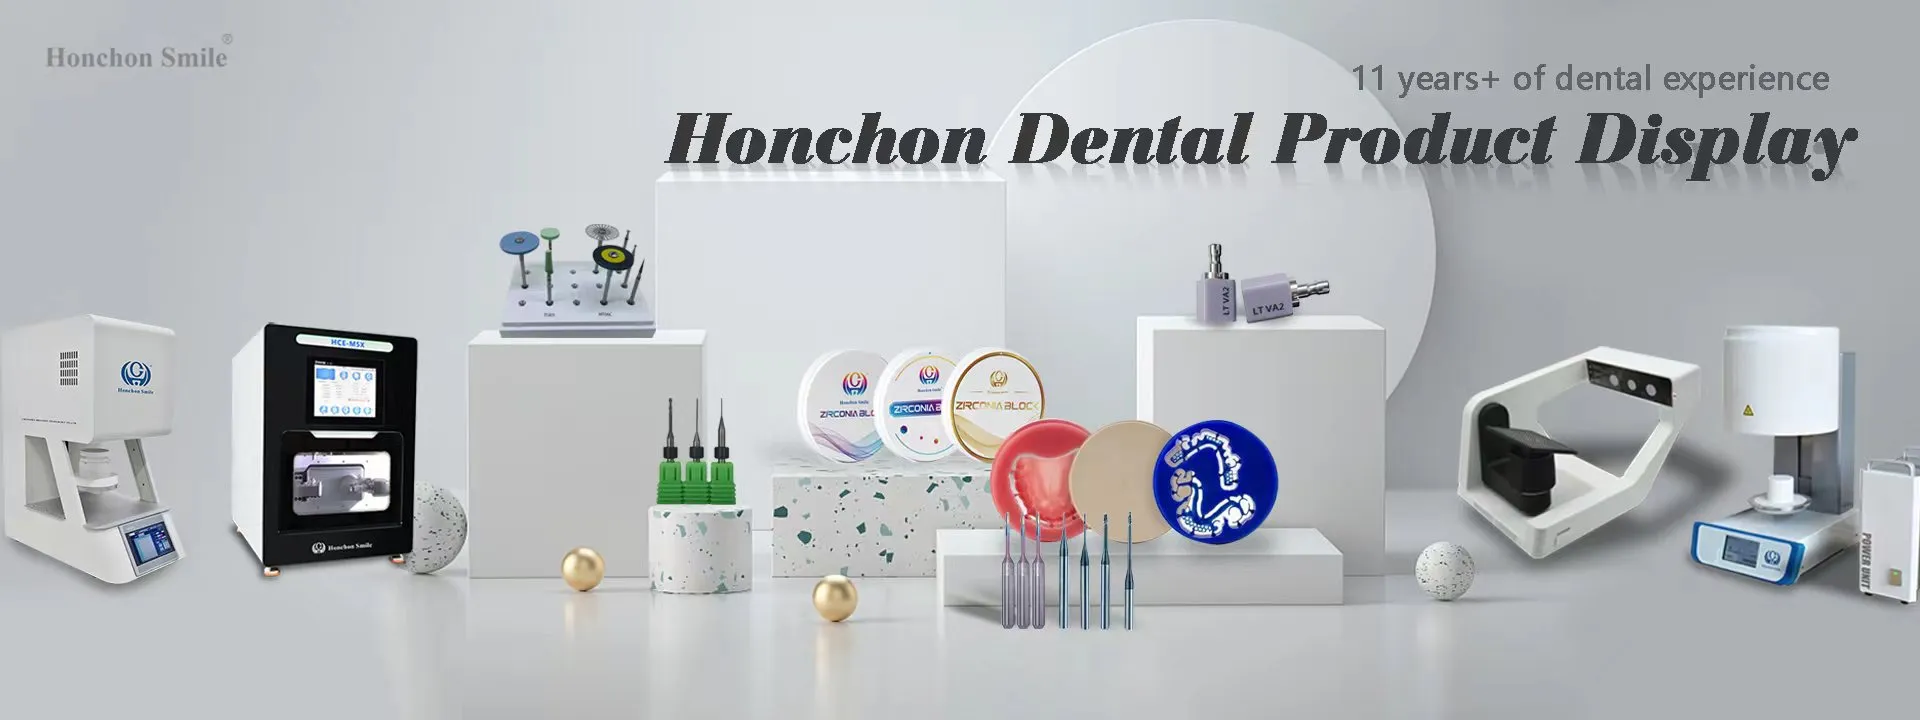 honchon dental product display